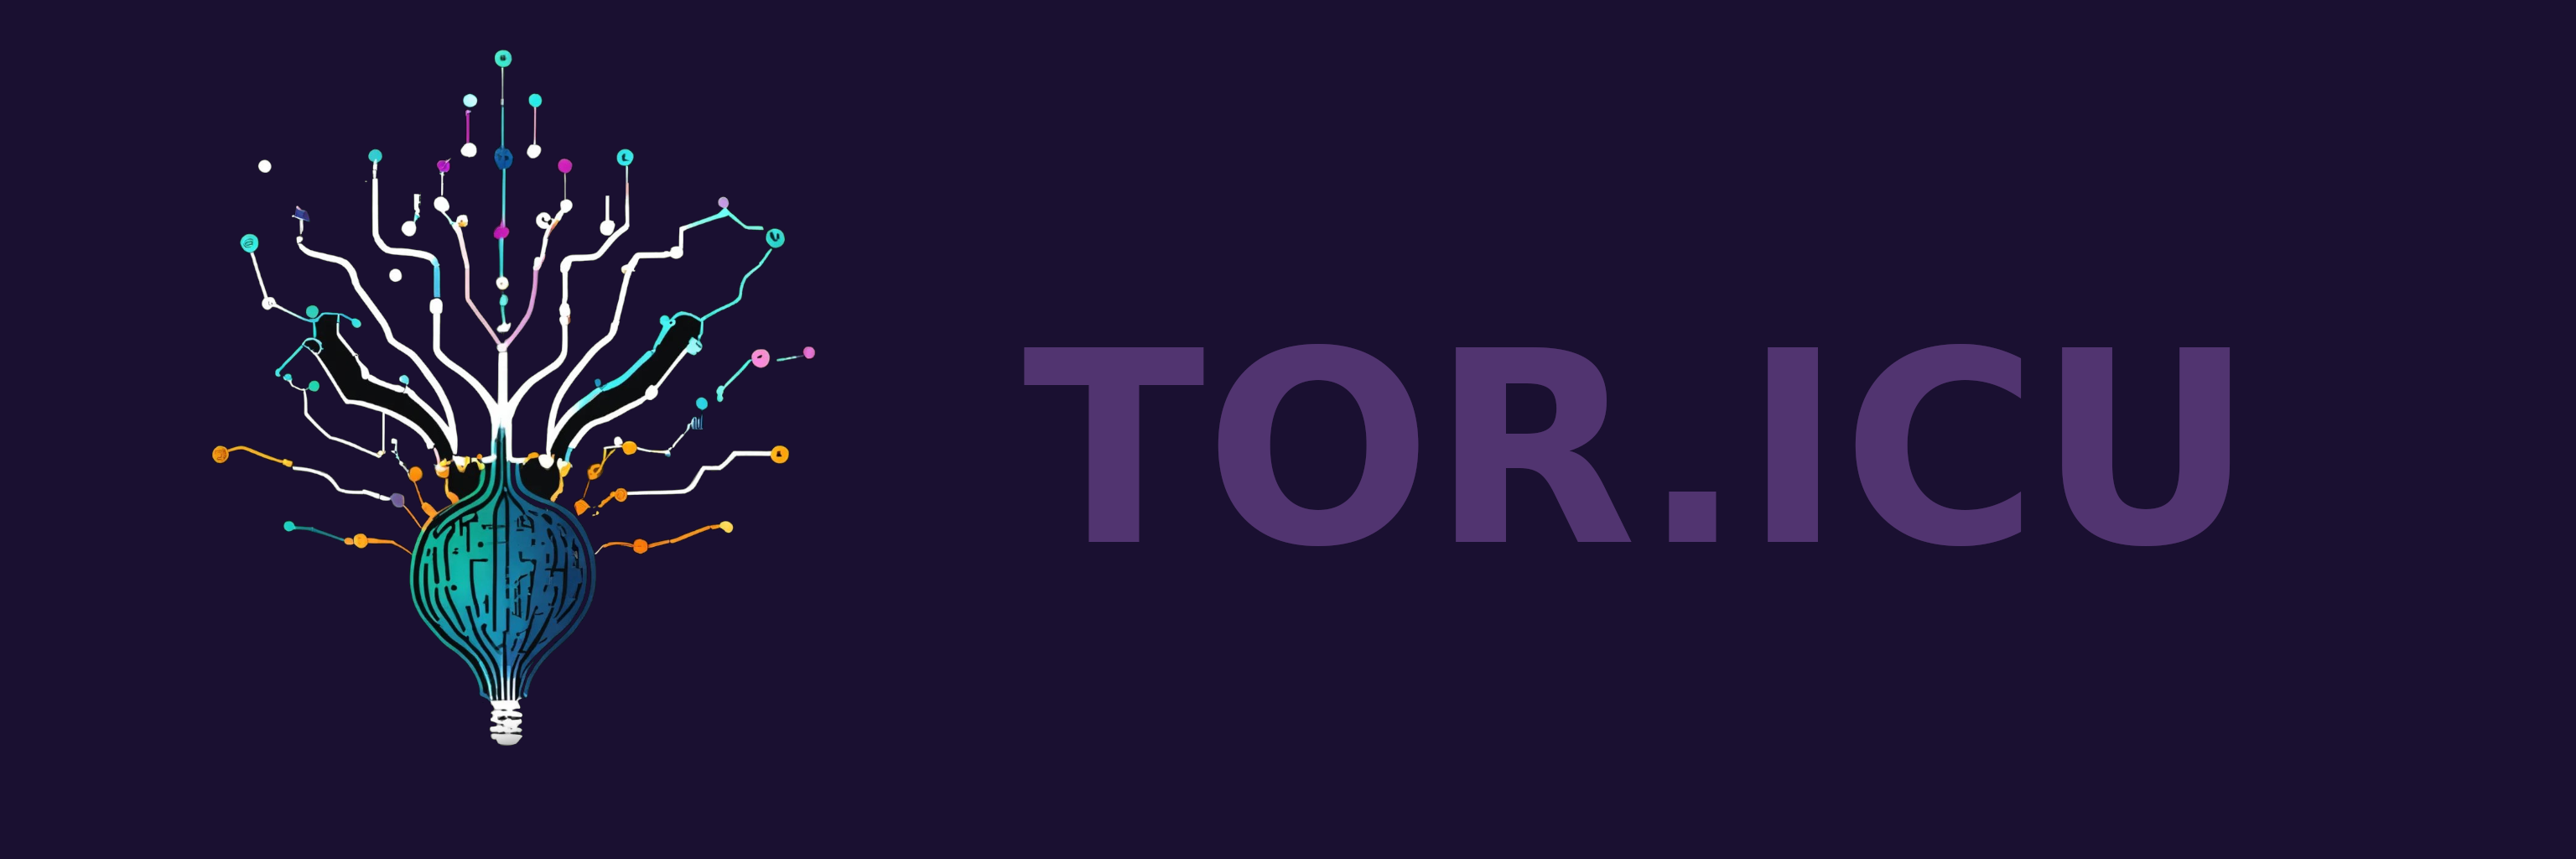 Tor.Icu Logo